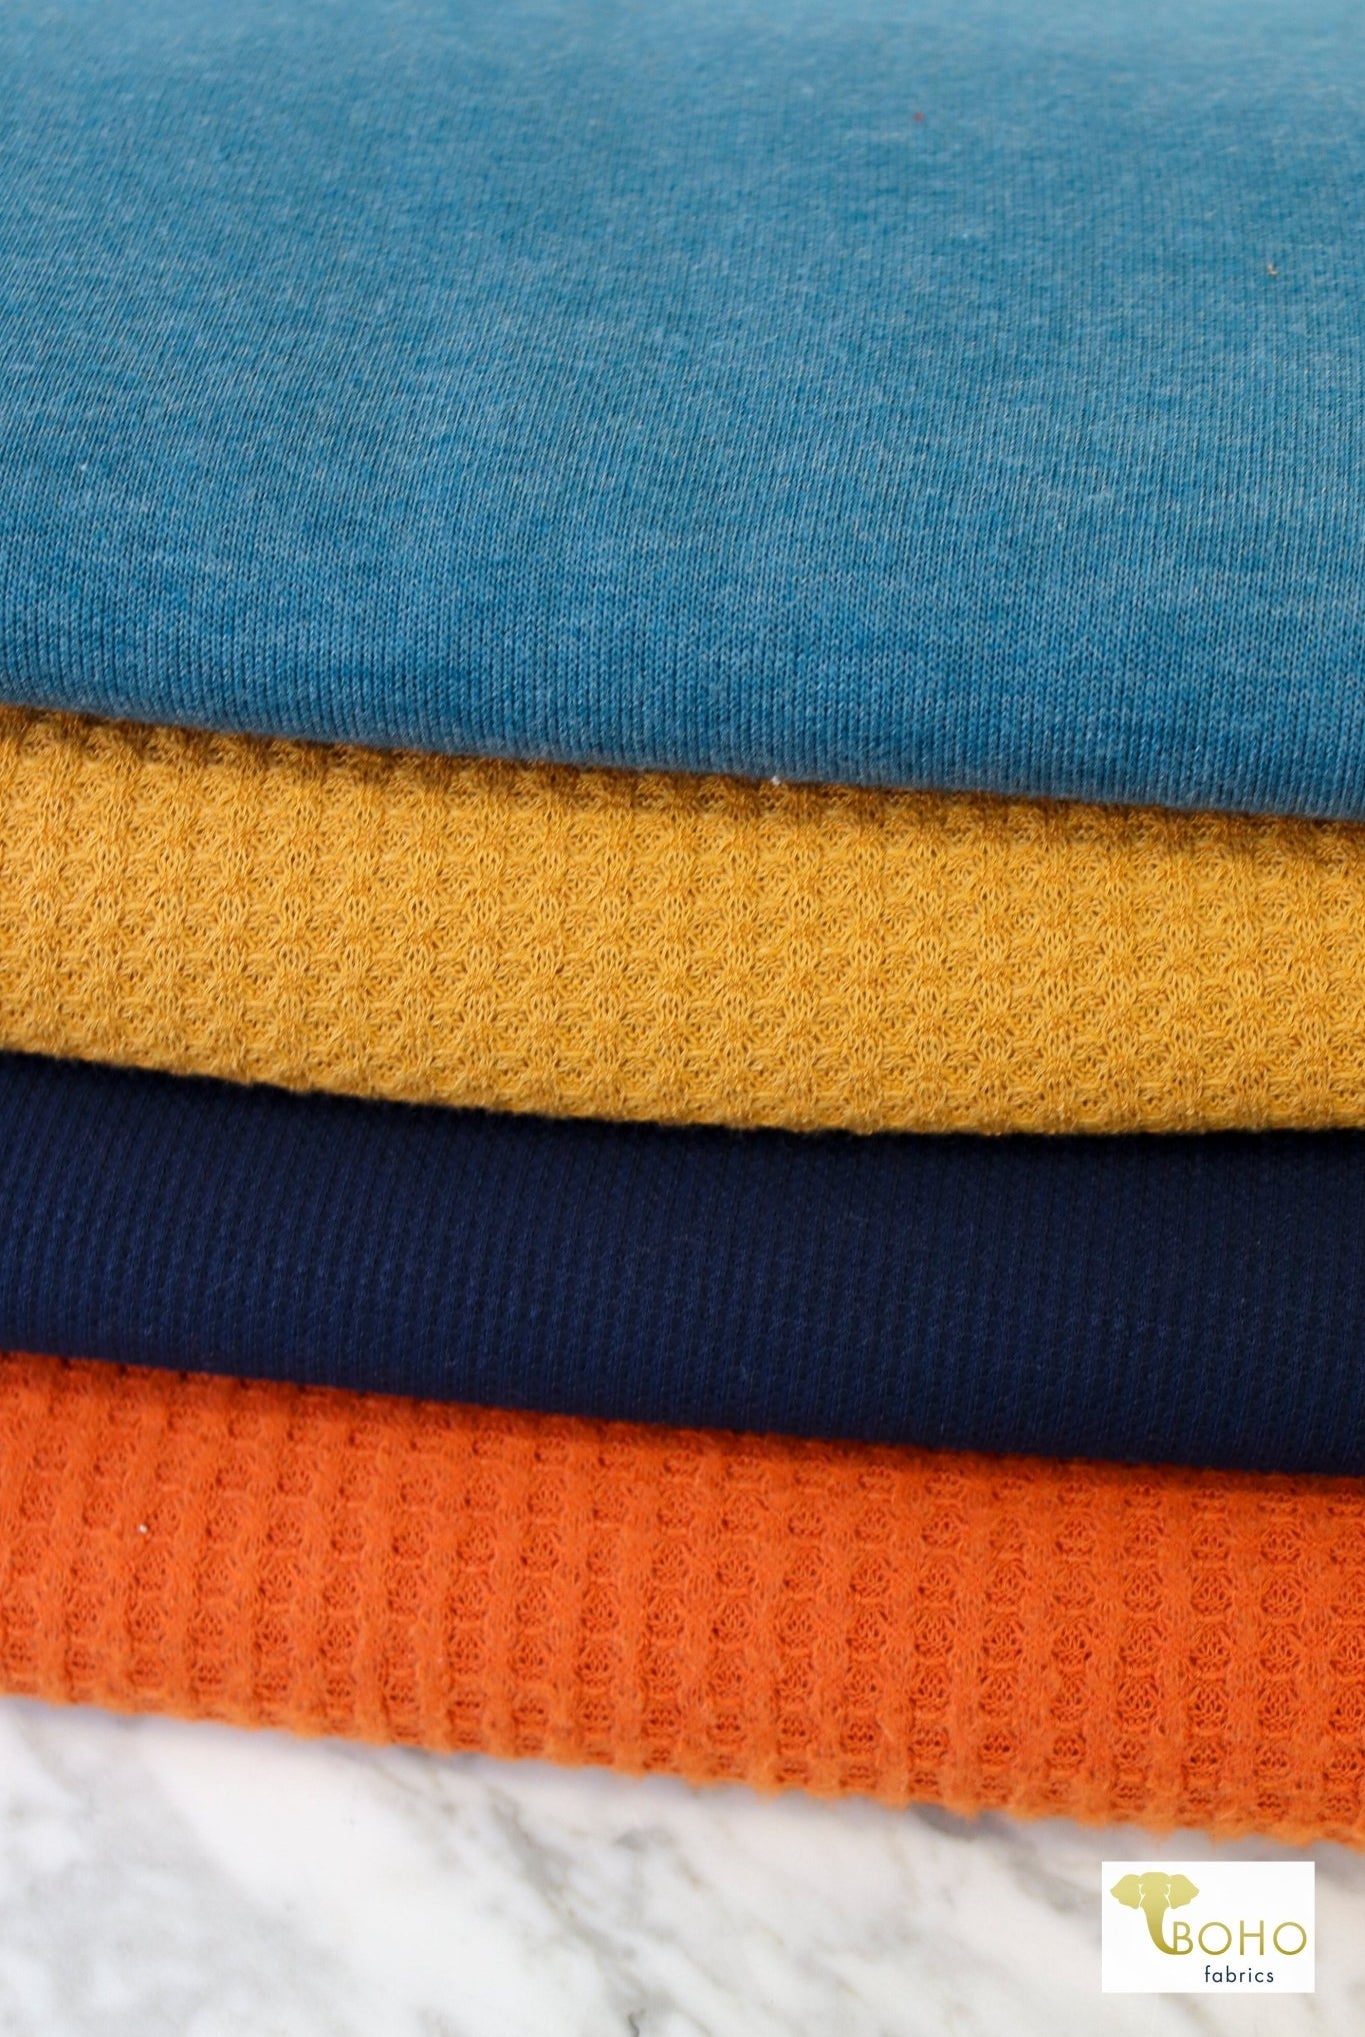 CM Bundle Stocking! Fire & Ice, Sweater Knit Bundle CB-SWTR-10 - Boho Fabrics